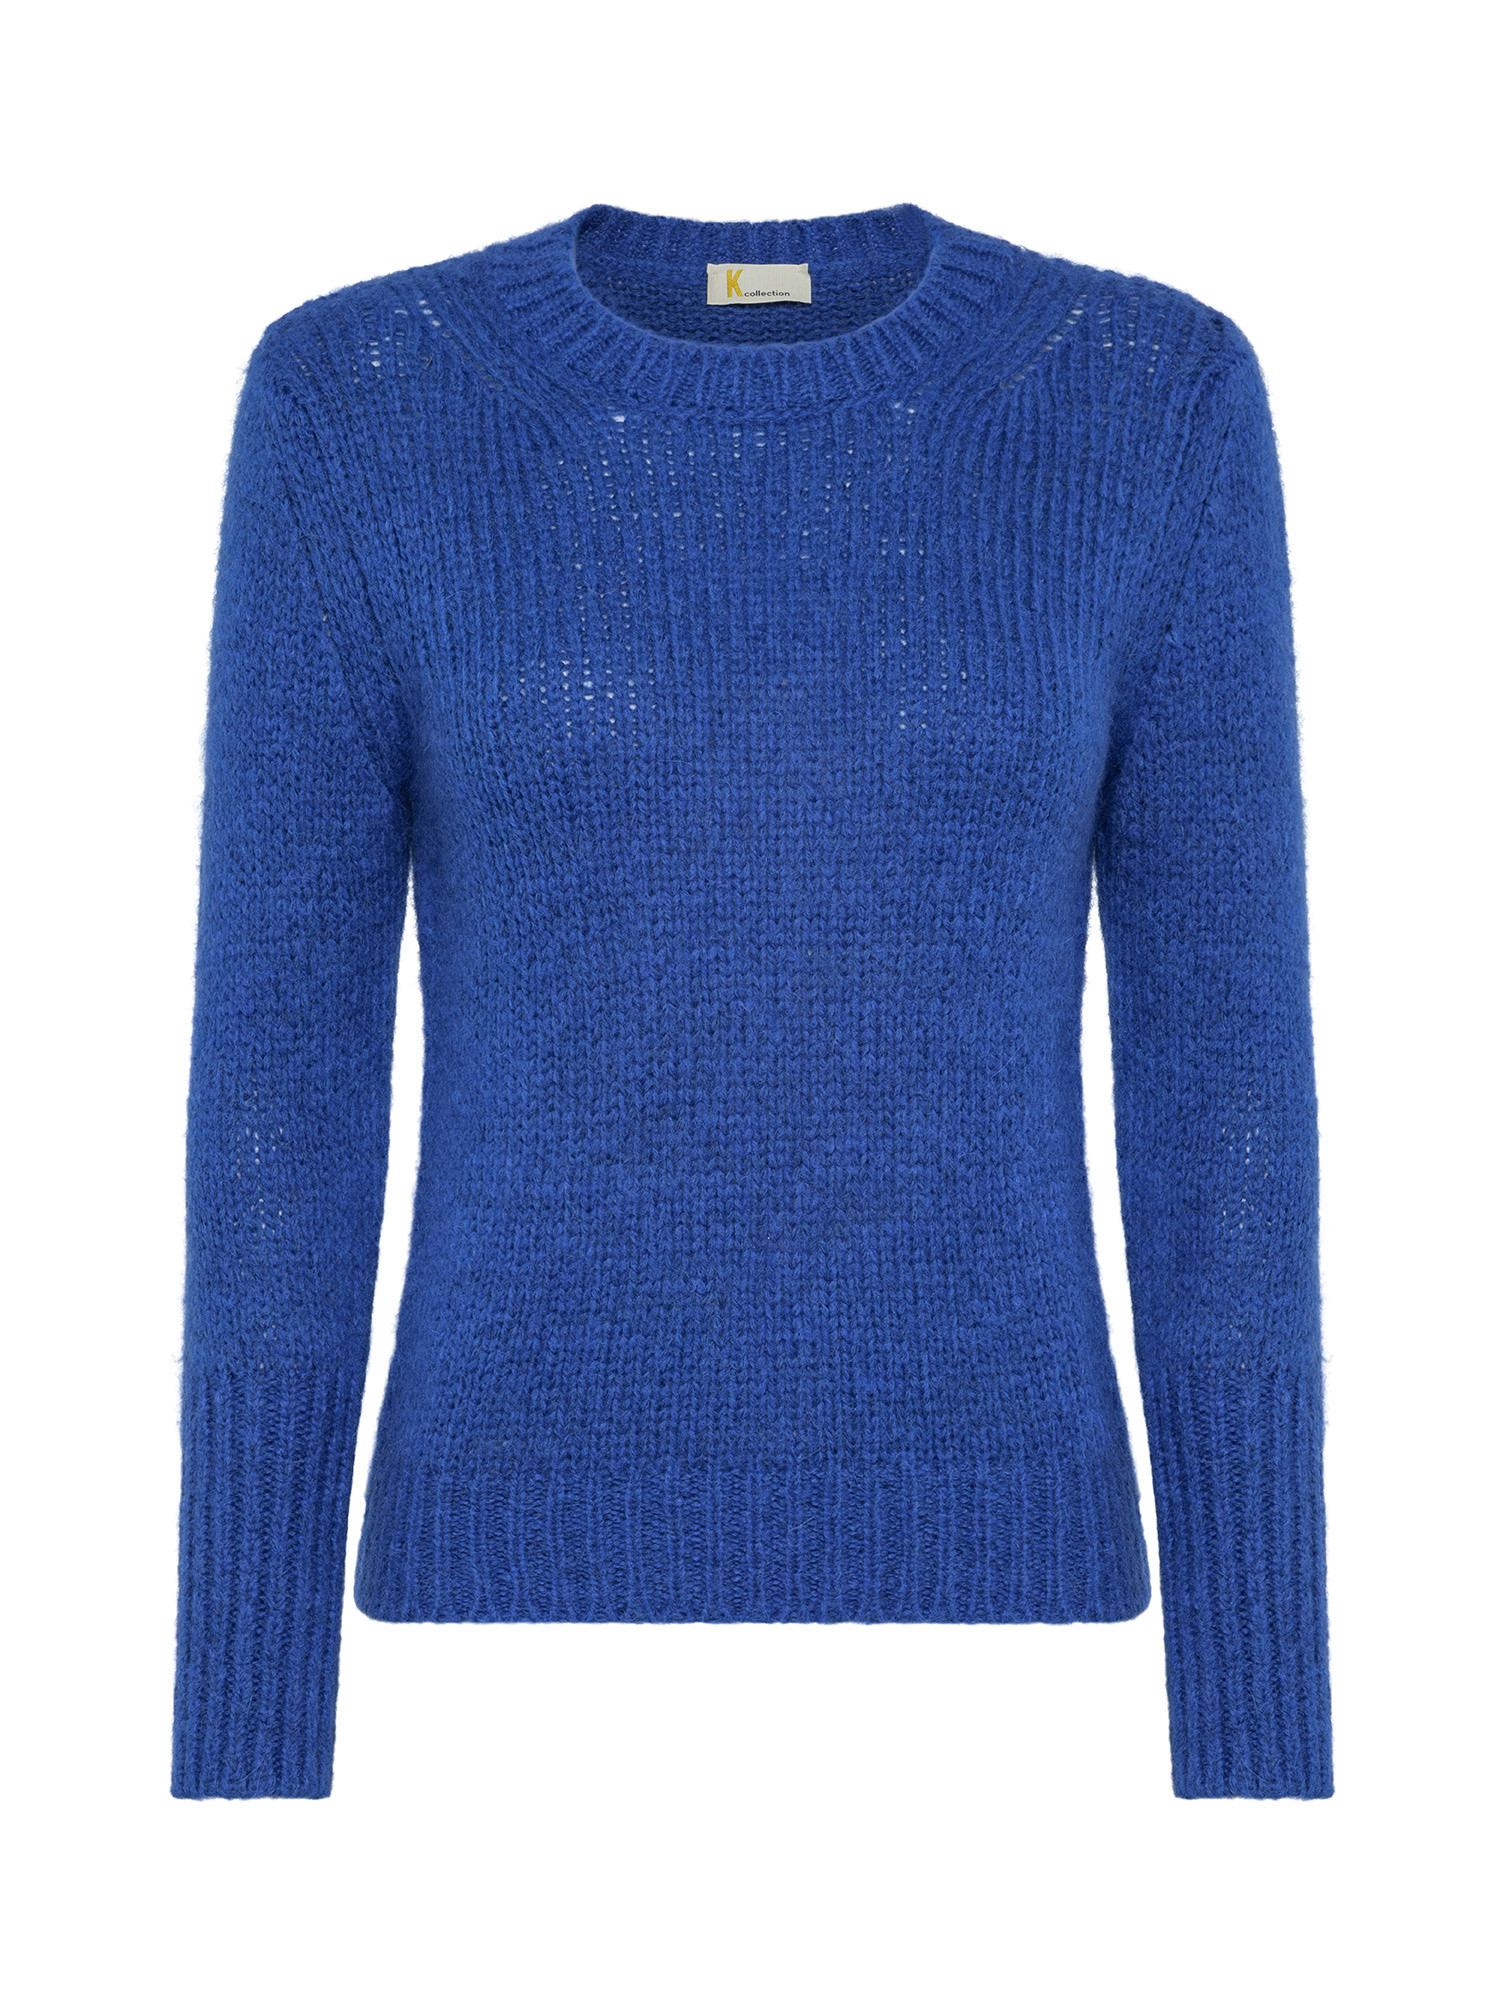 K Collection - Crewneck sweater, Blue, large image number 0